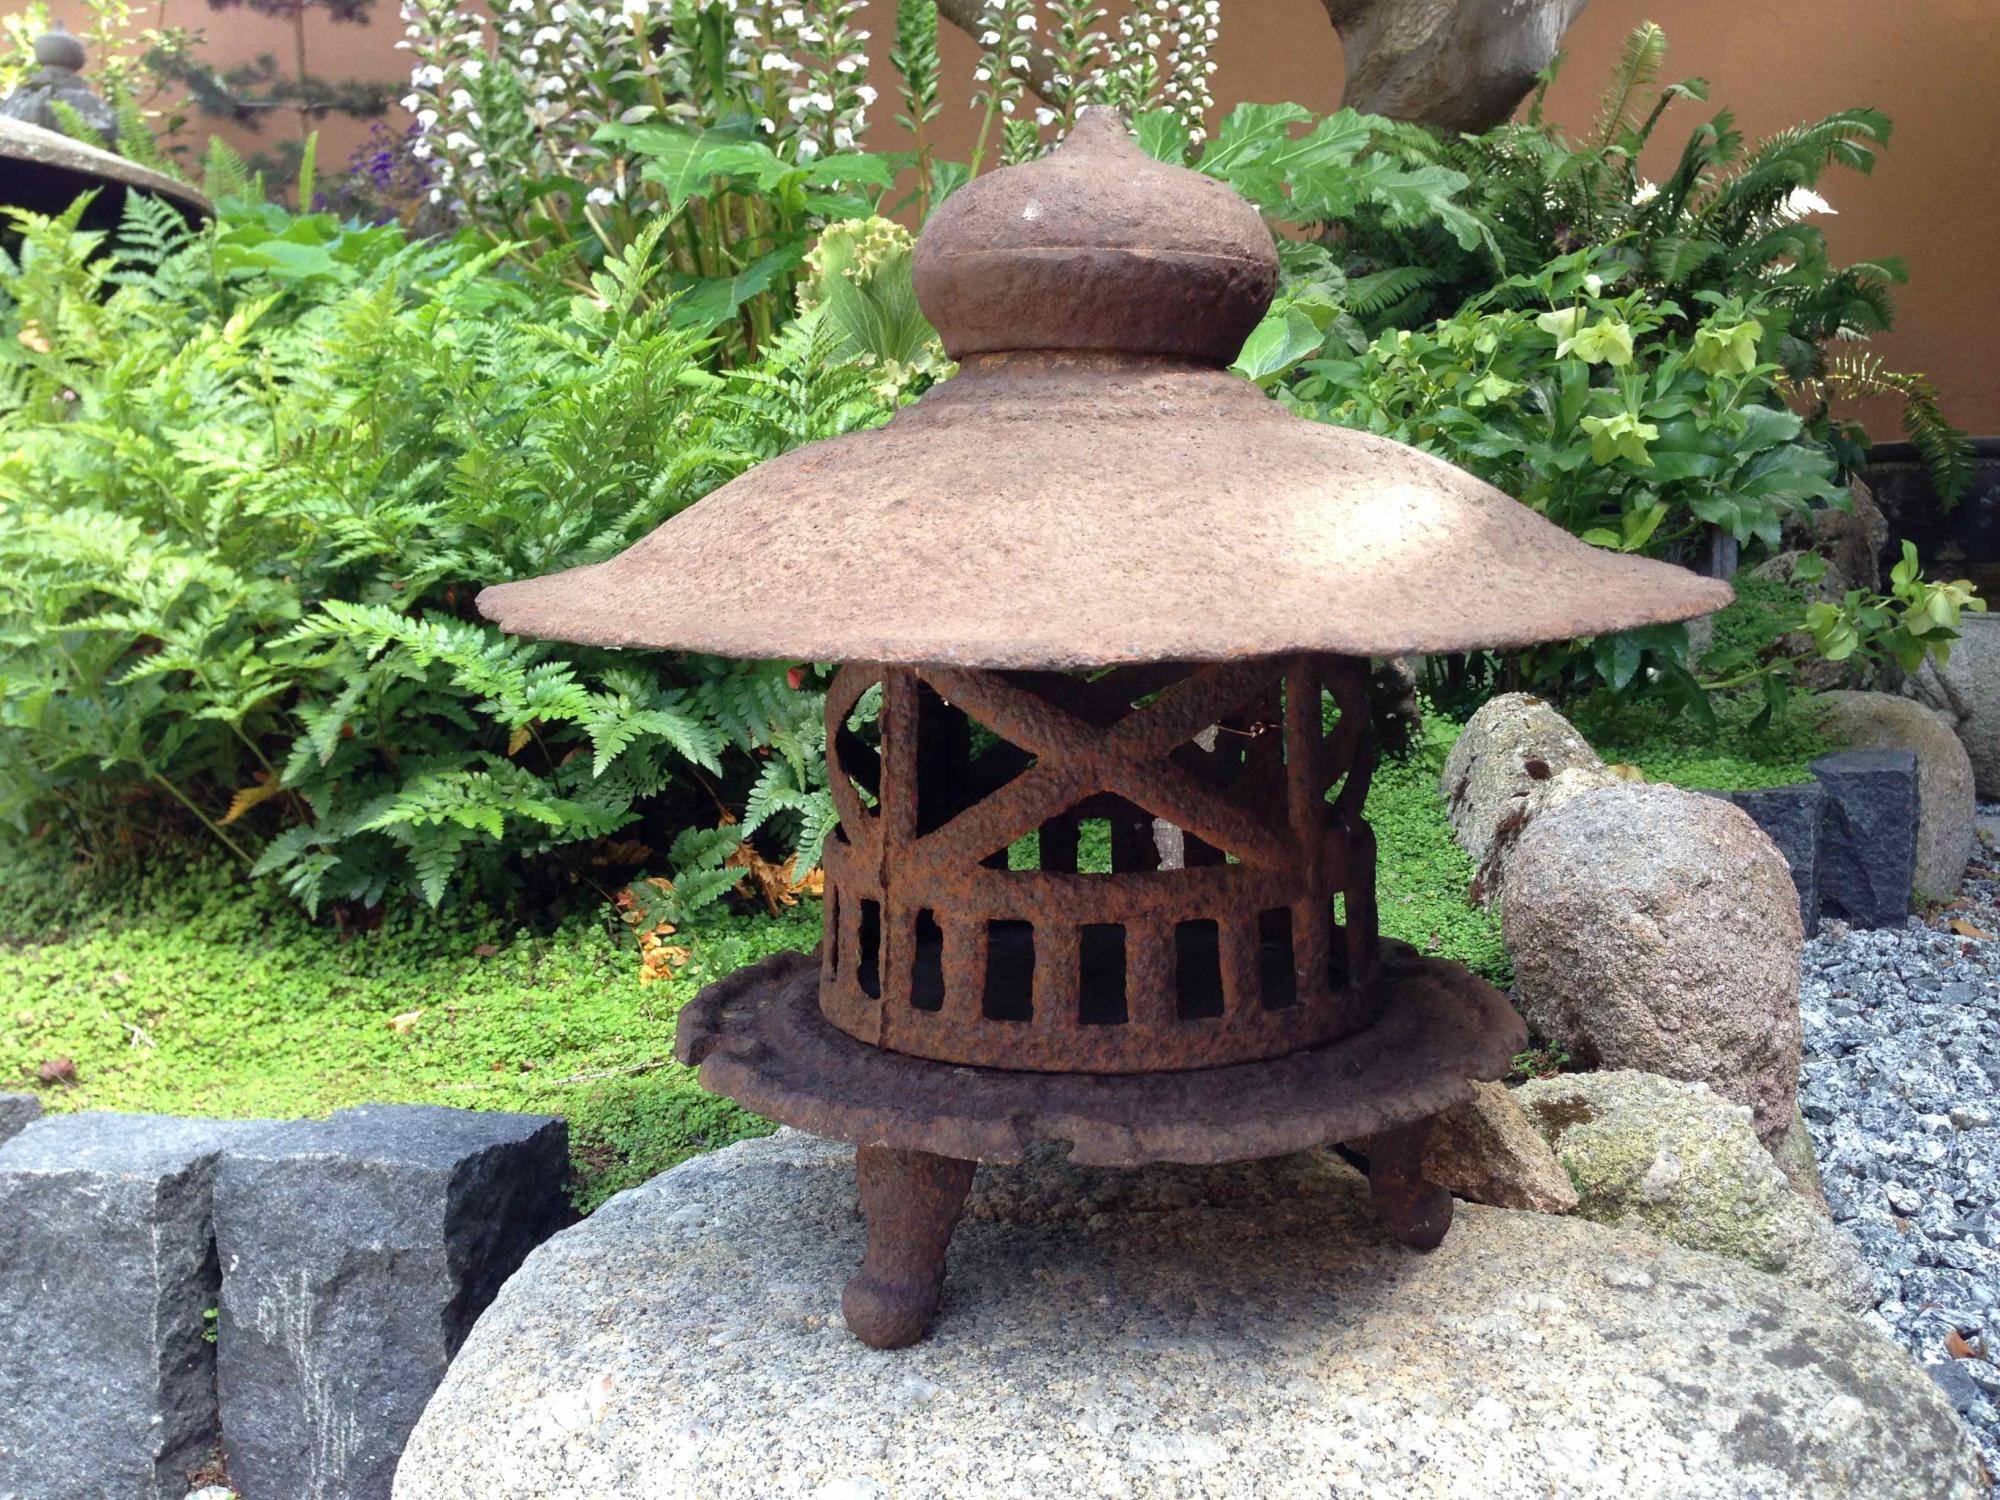 Iron tea garden lantern with pattern of three rows of squares
Material: Iron 
Origin: Japan
Age: circa 1900s.
Size: 17